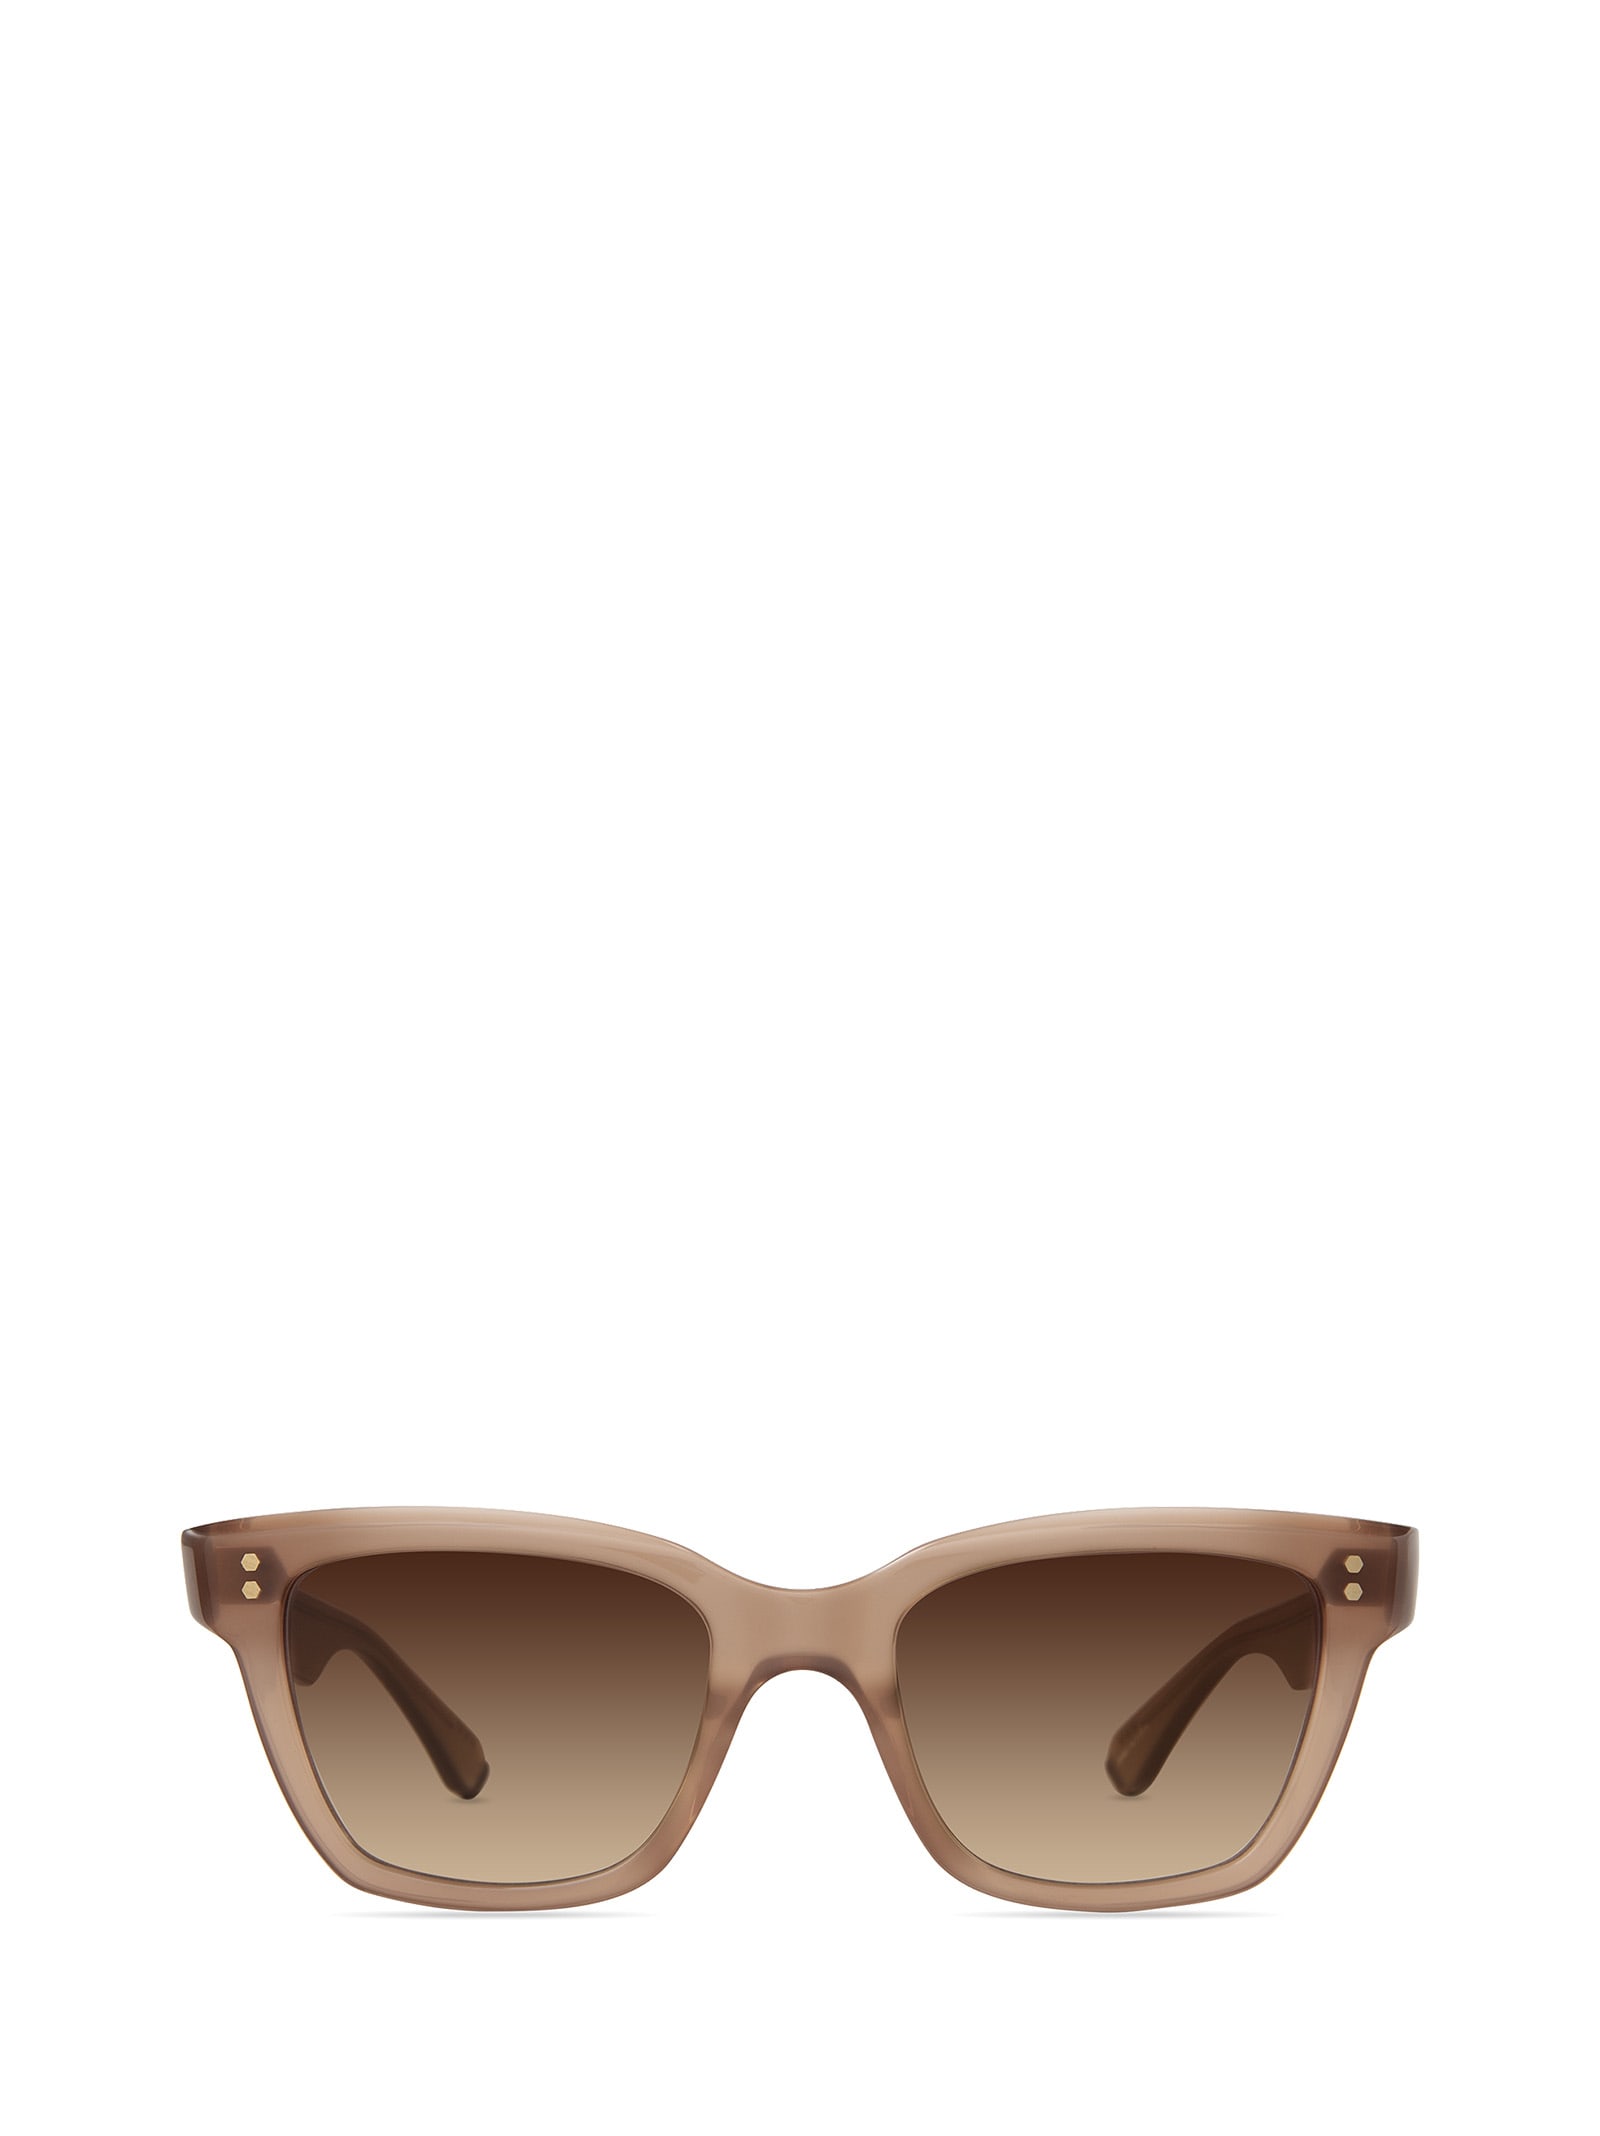 Lola S Sweet Rose-chocolate Gold Sunglasses